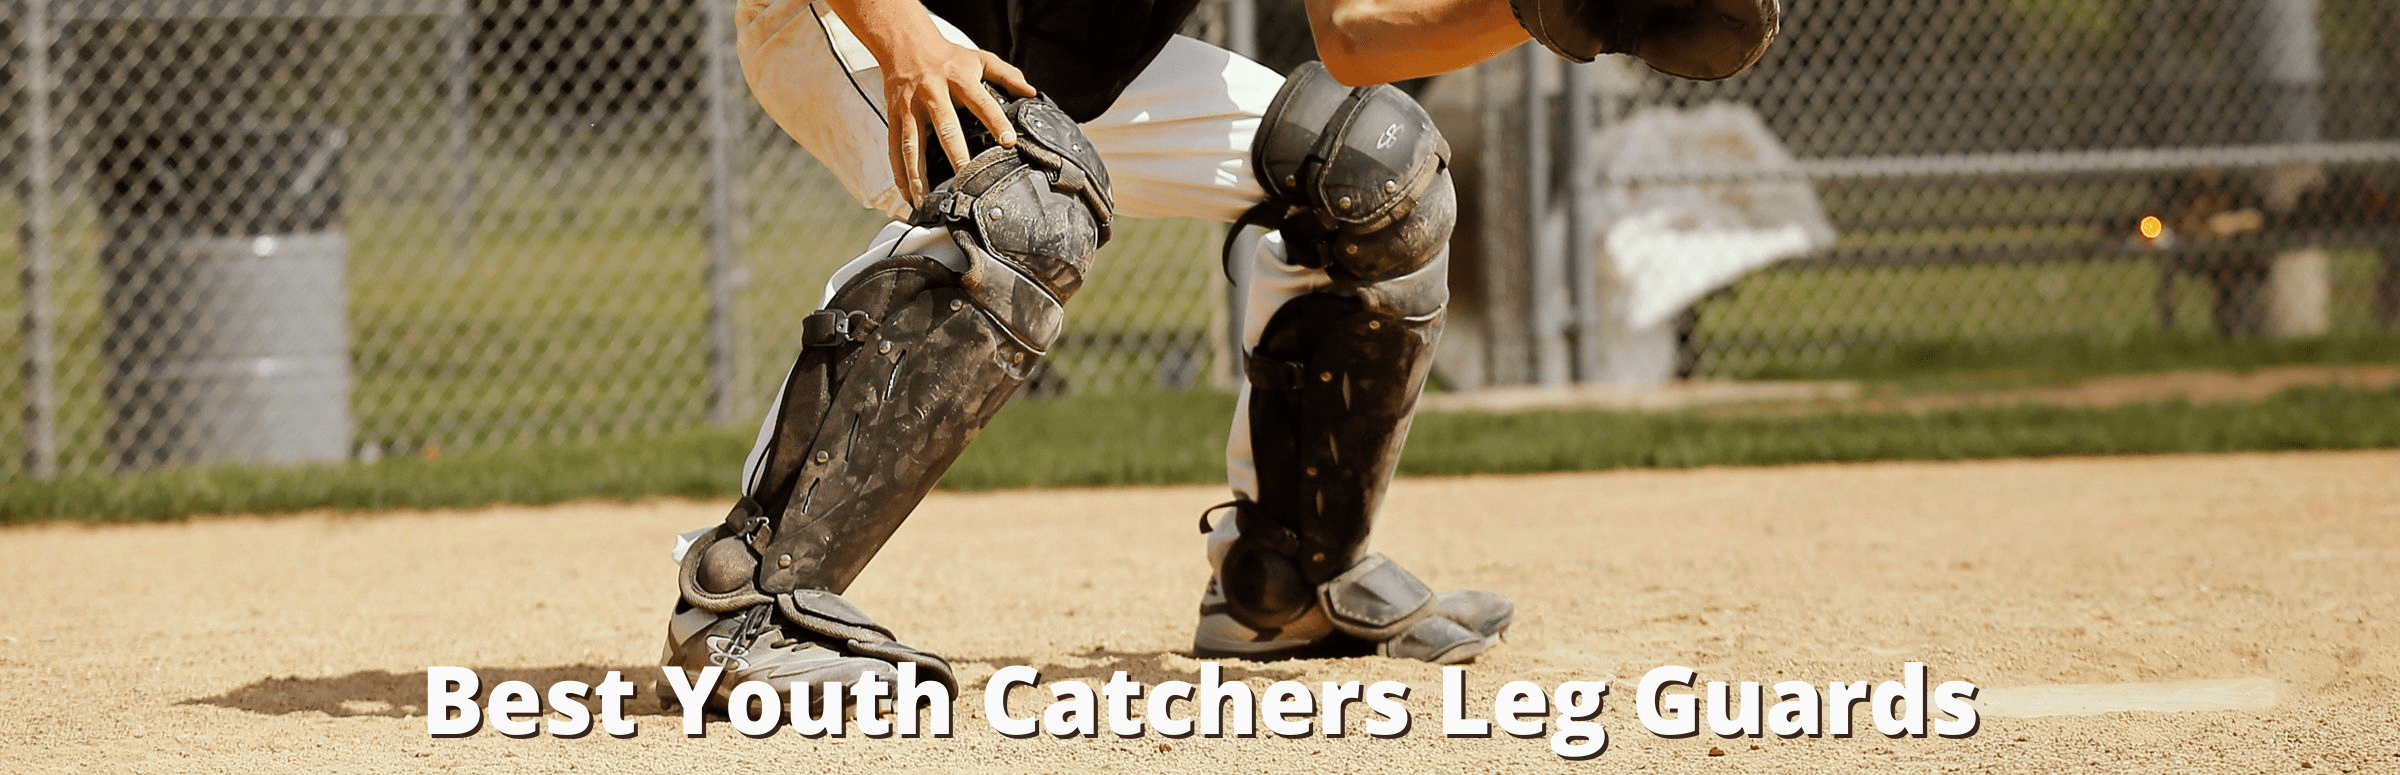 Best Youth Catchers Leg Guards